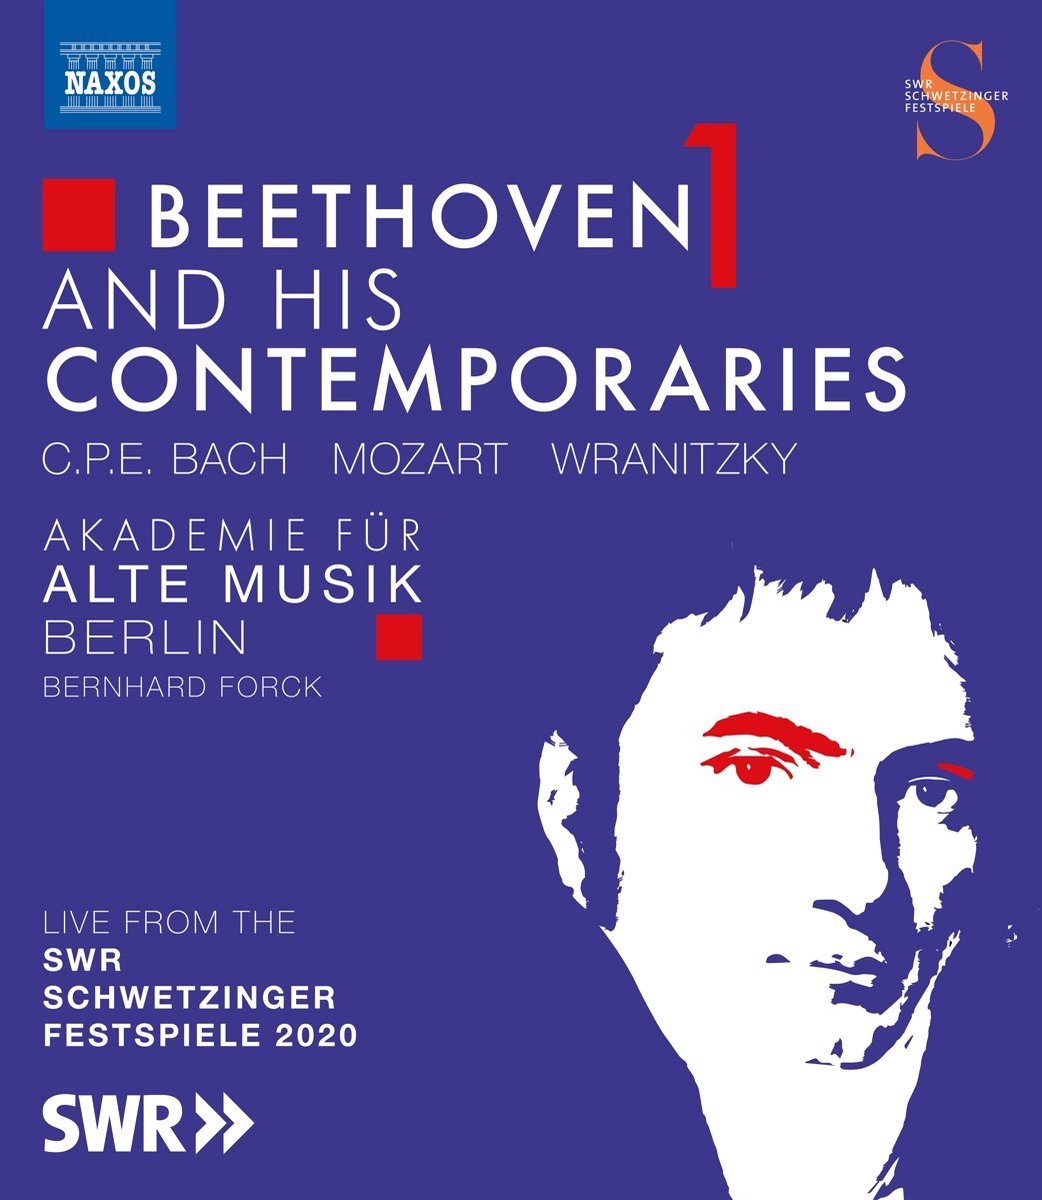 Akademie Für Alte Musik Berlin & Bernhard Forck - Beethoven And His Contemporaries, Vol. 1 (Blu-ray)